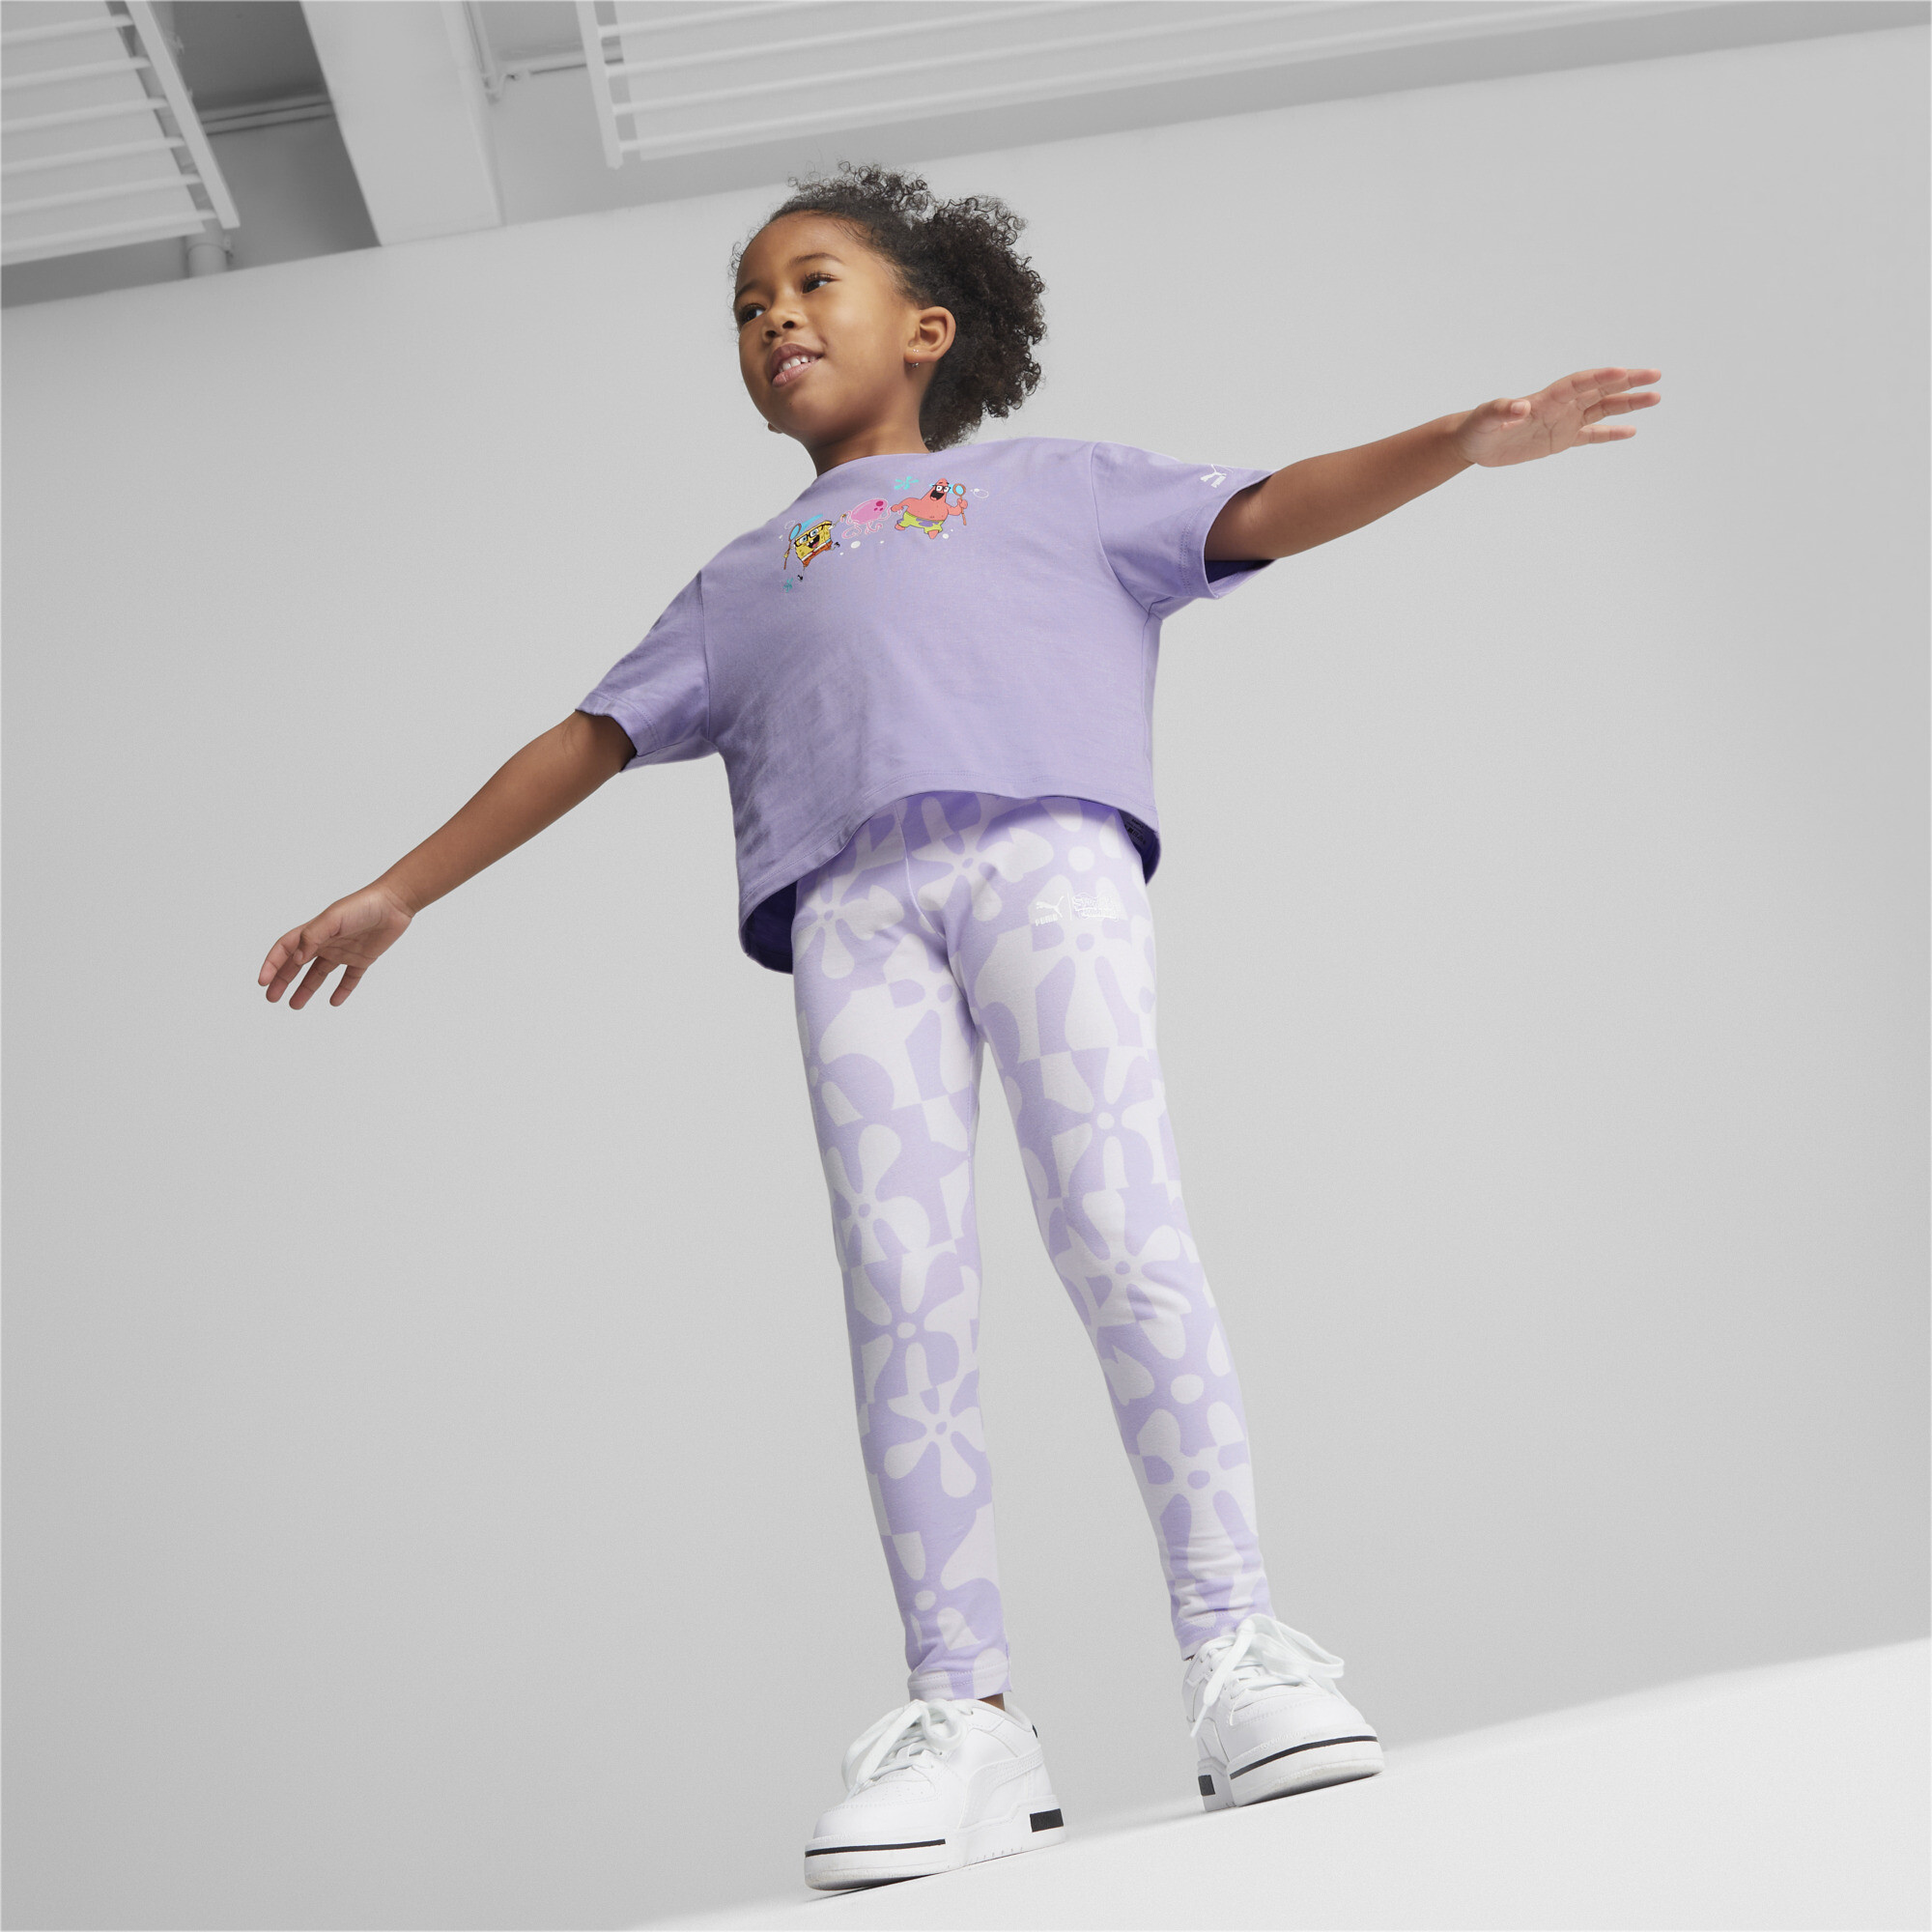 PUMA X SPONGEBOB T-Shirt Kids In Purple, Size 3-4 Youth